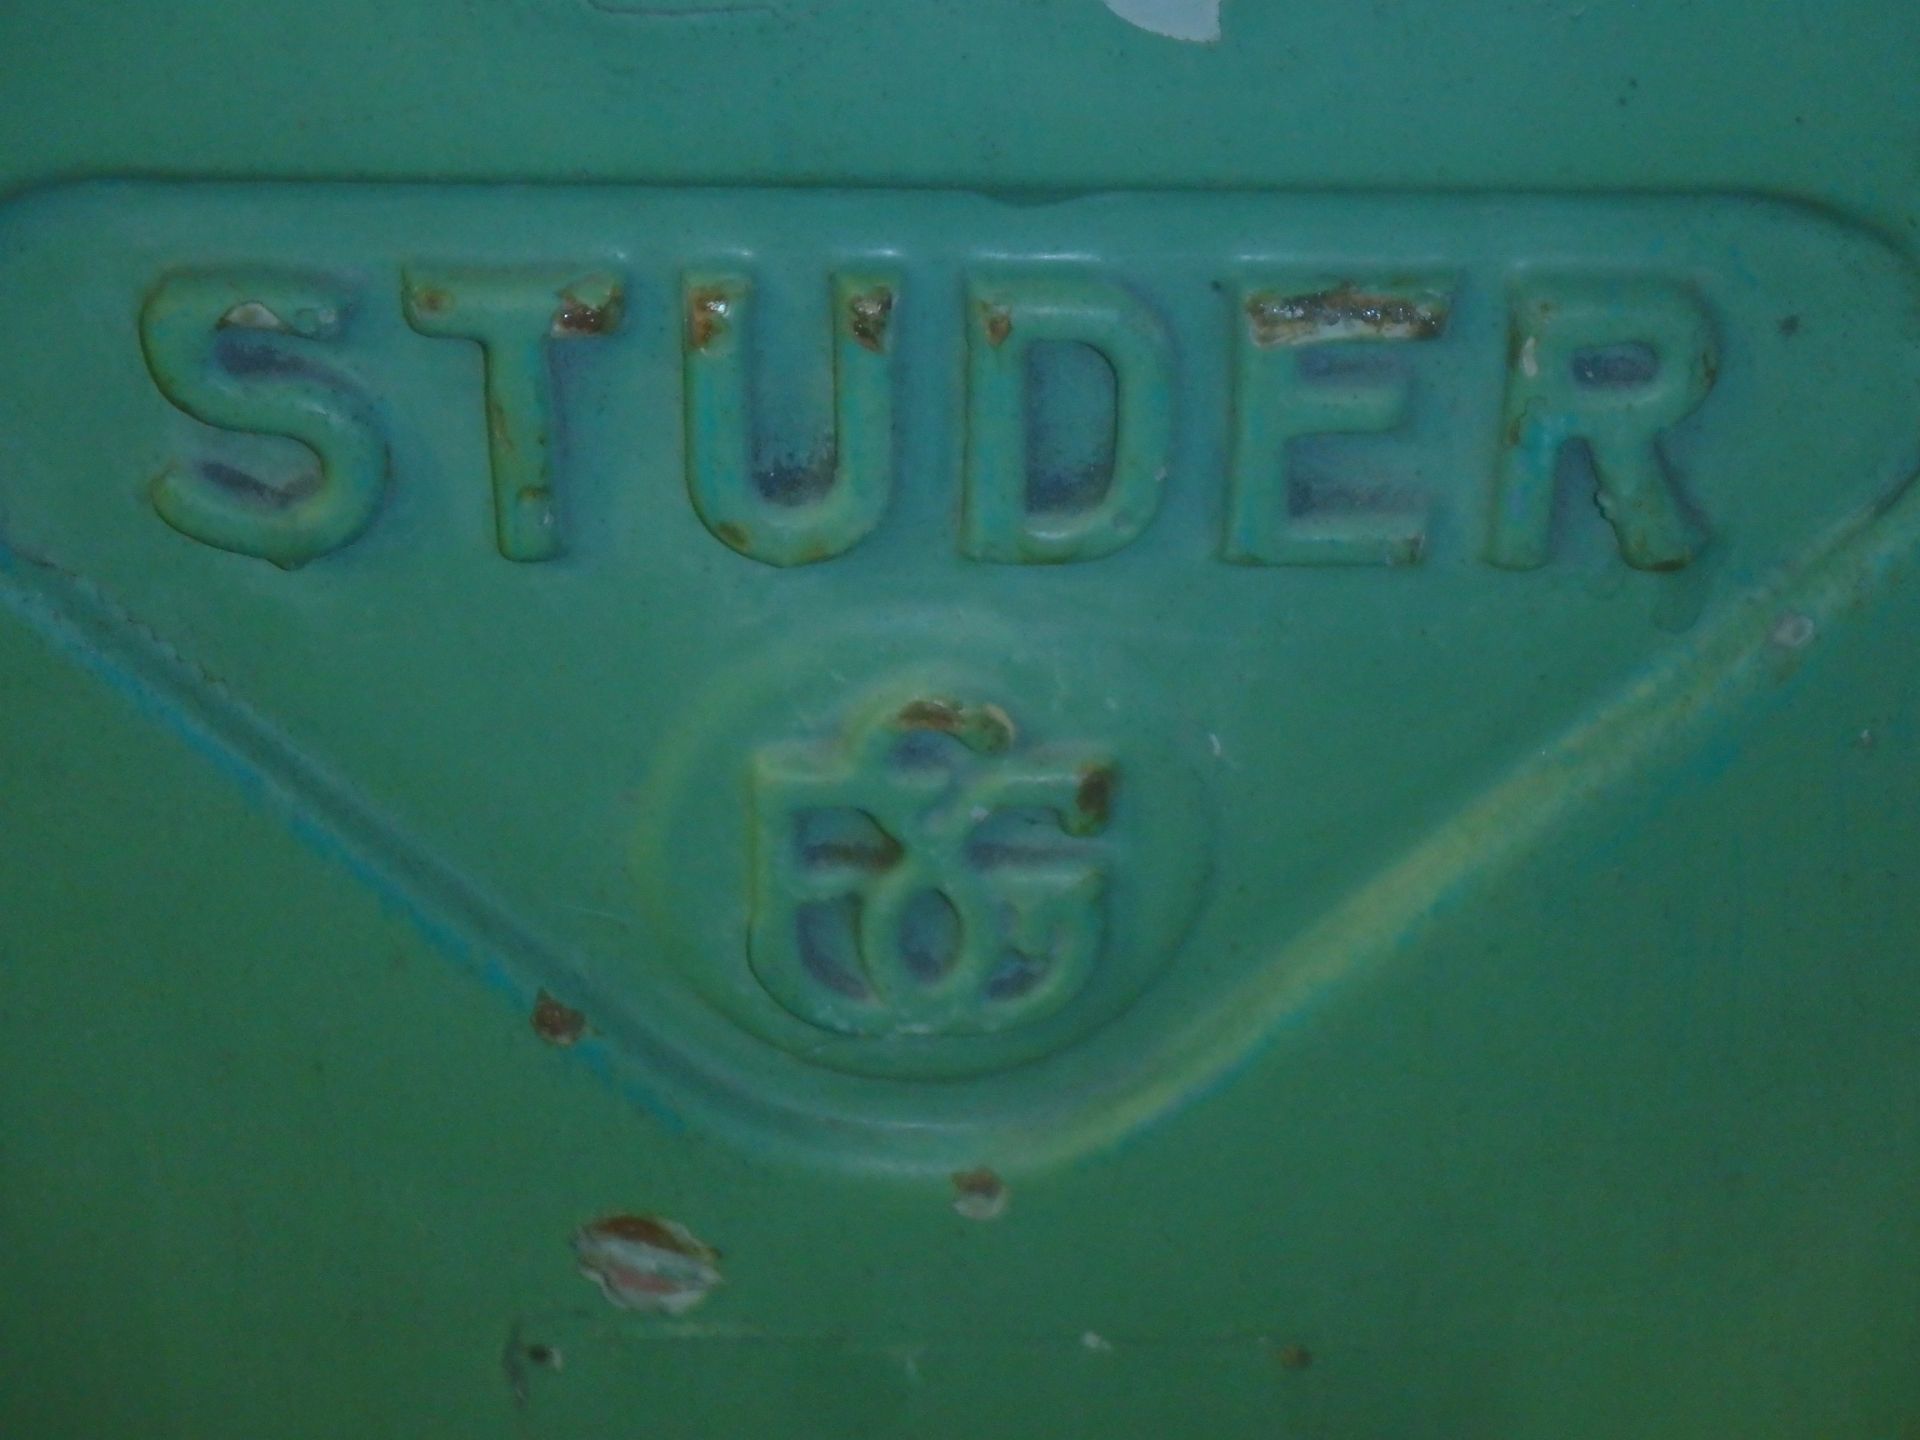 Studer Universal tool cutter grinder - Image 6 of 6